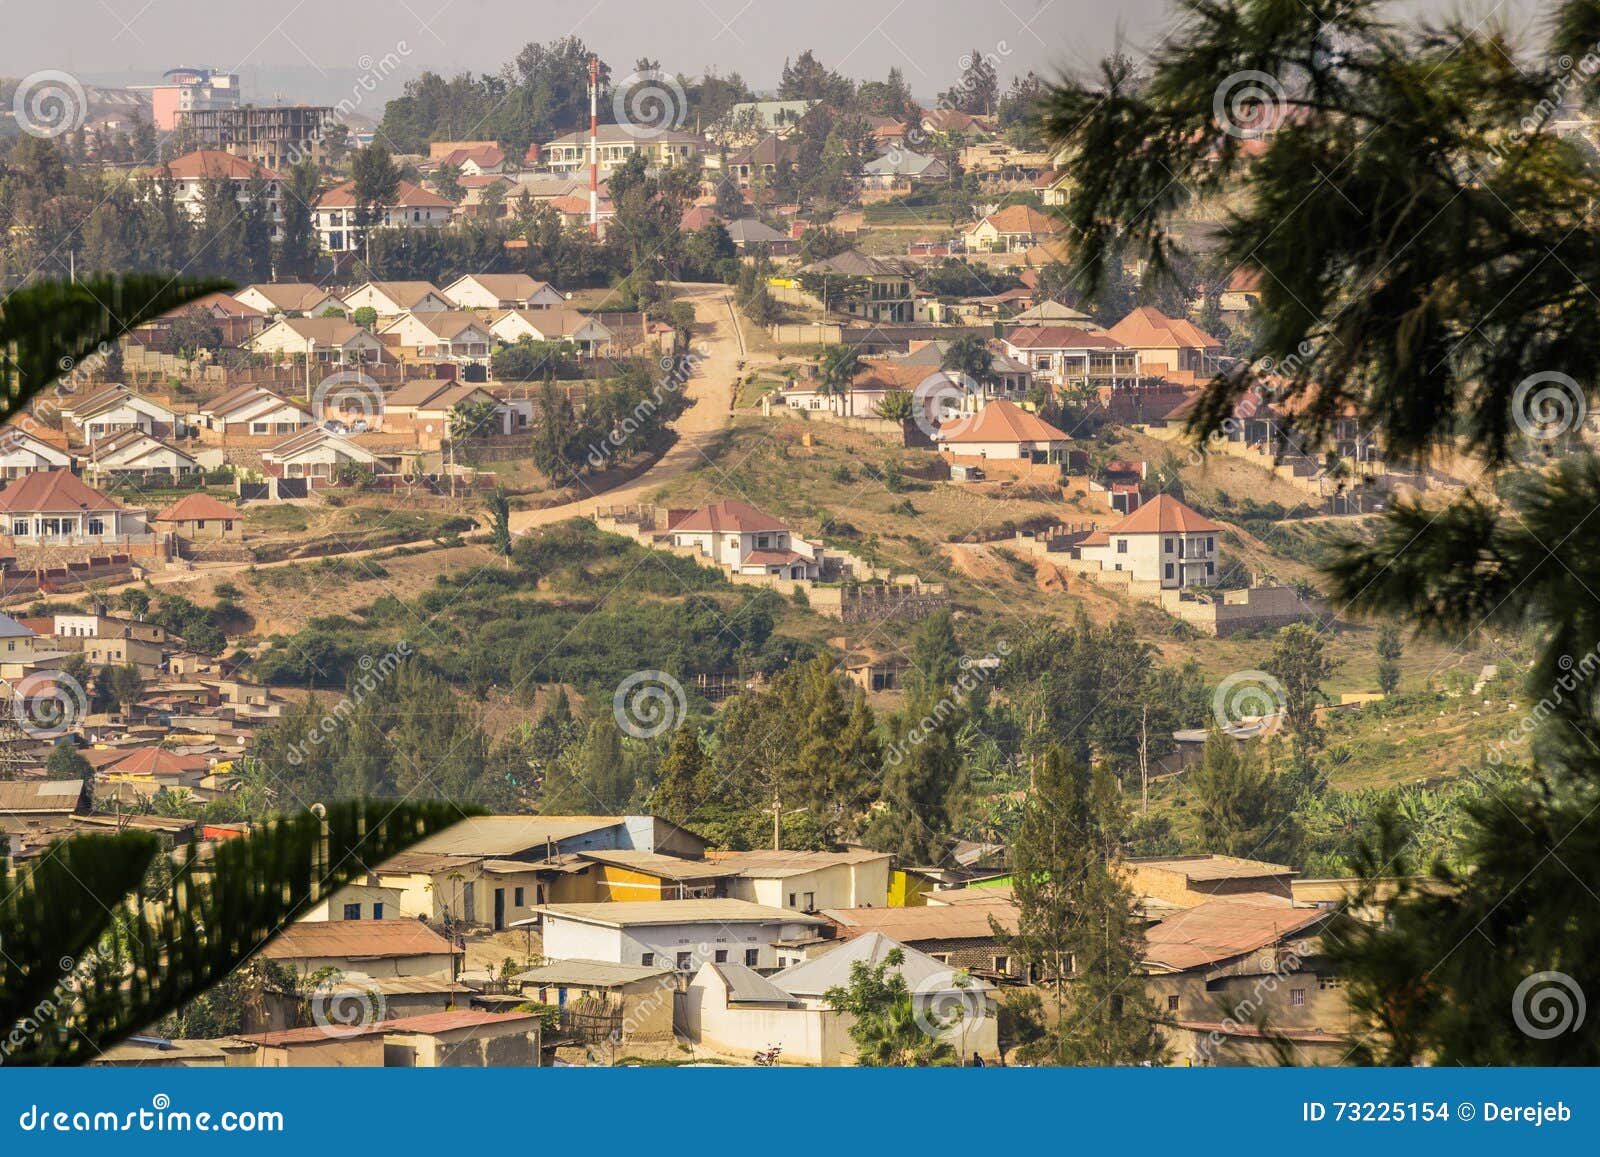 houses on the hills of kigali